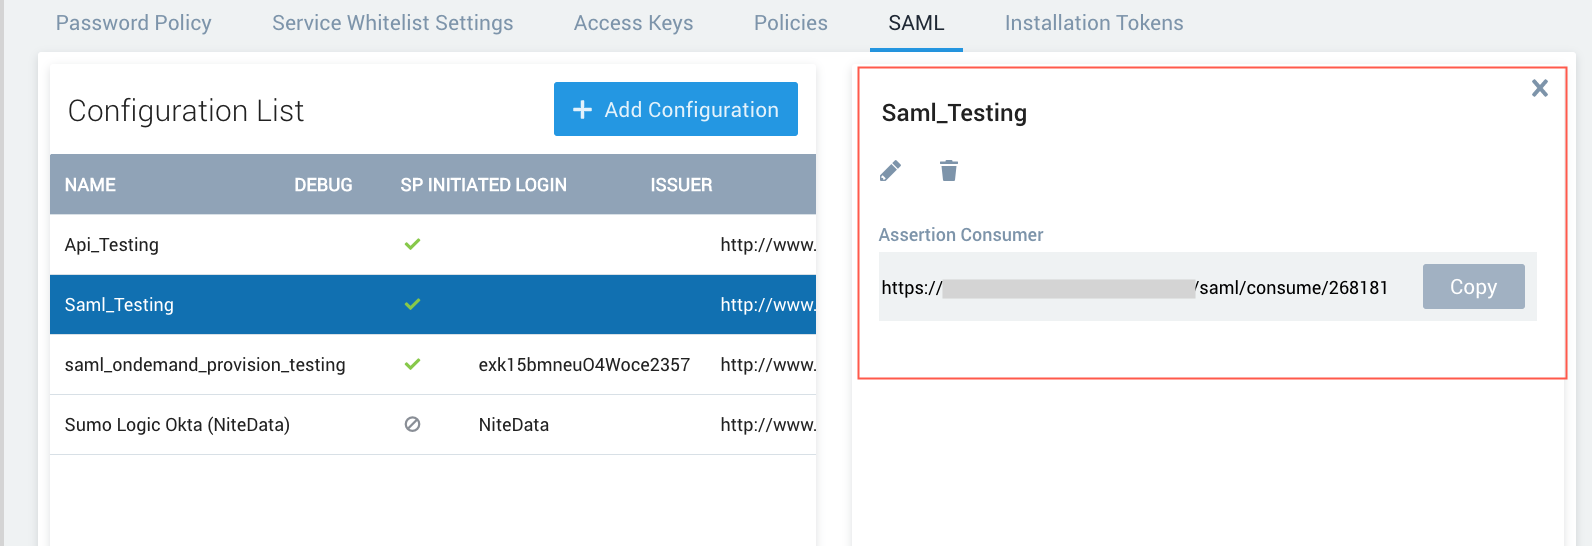 Summary of the SAML configuration parameters